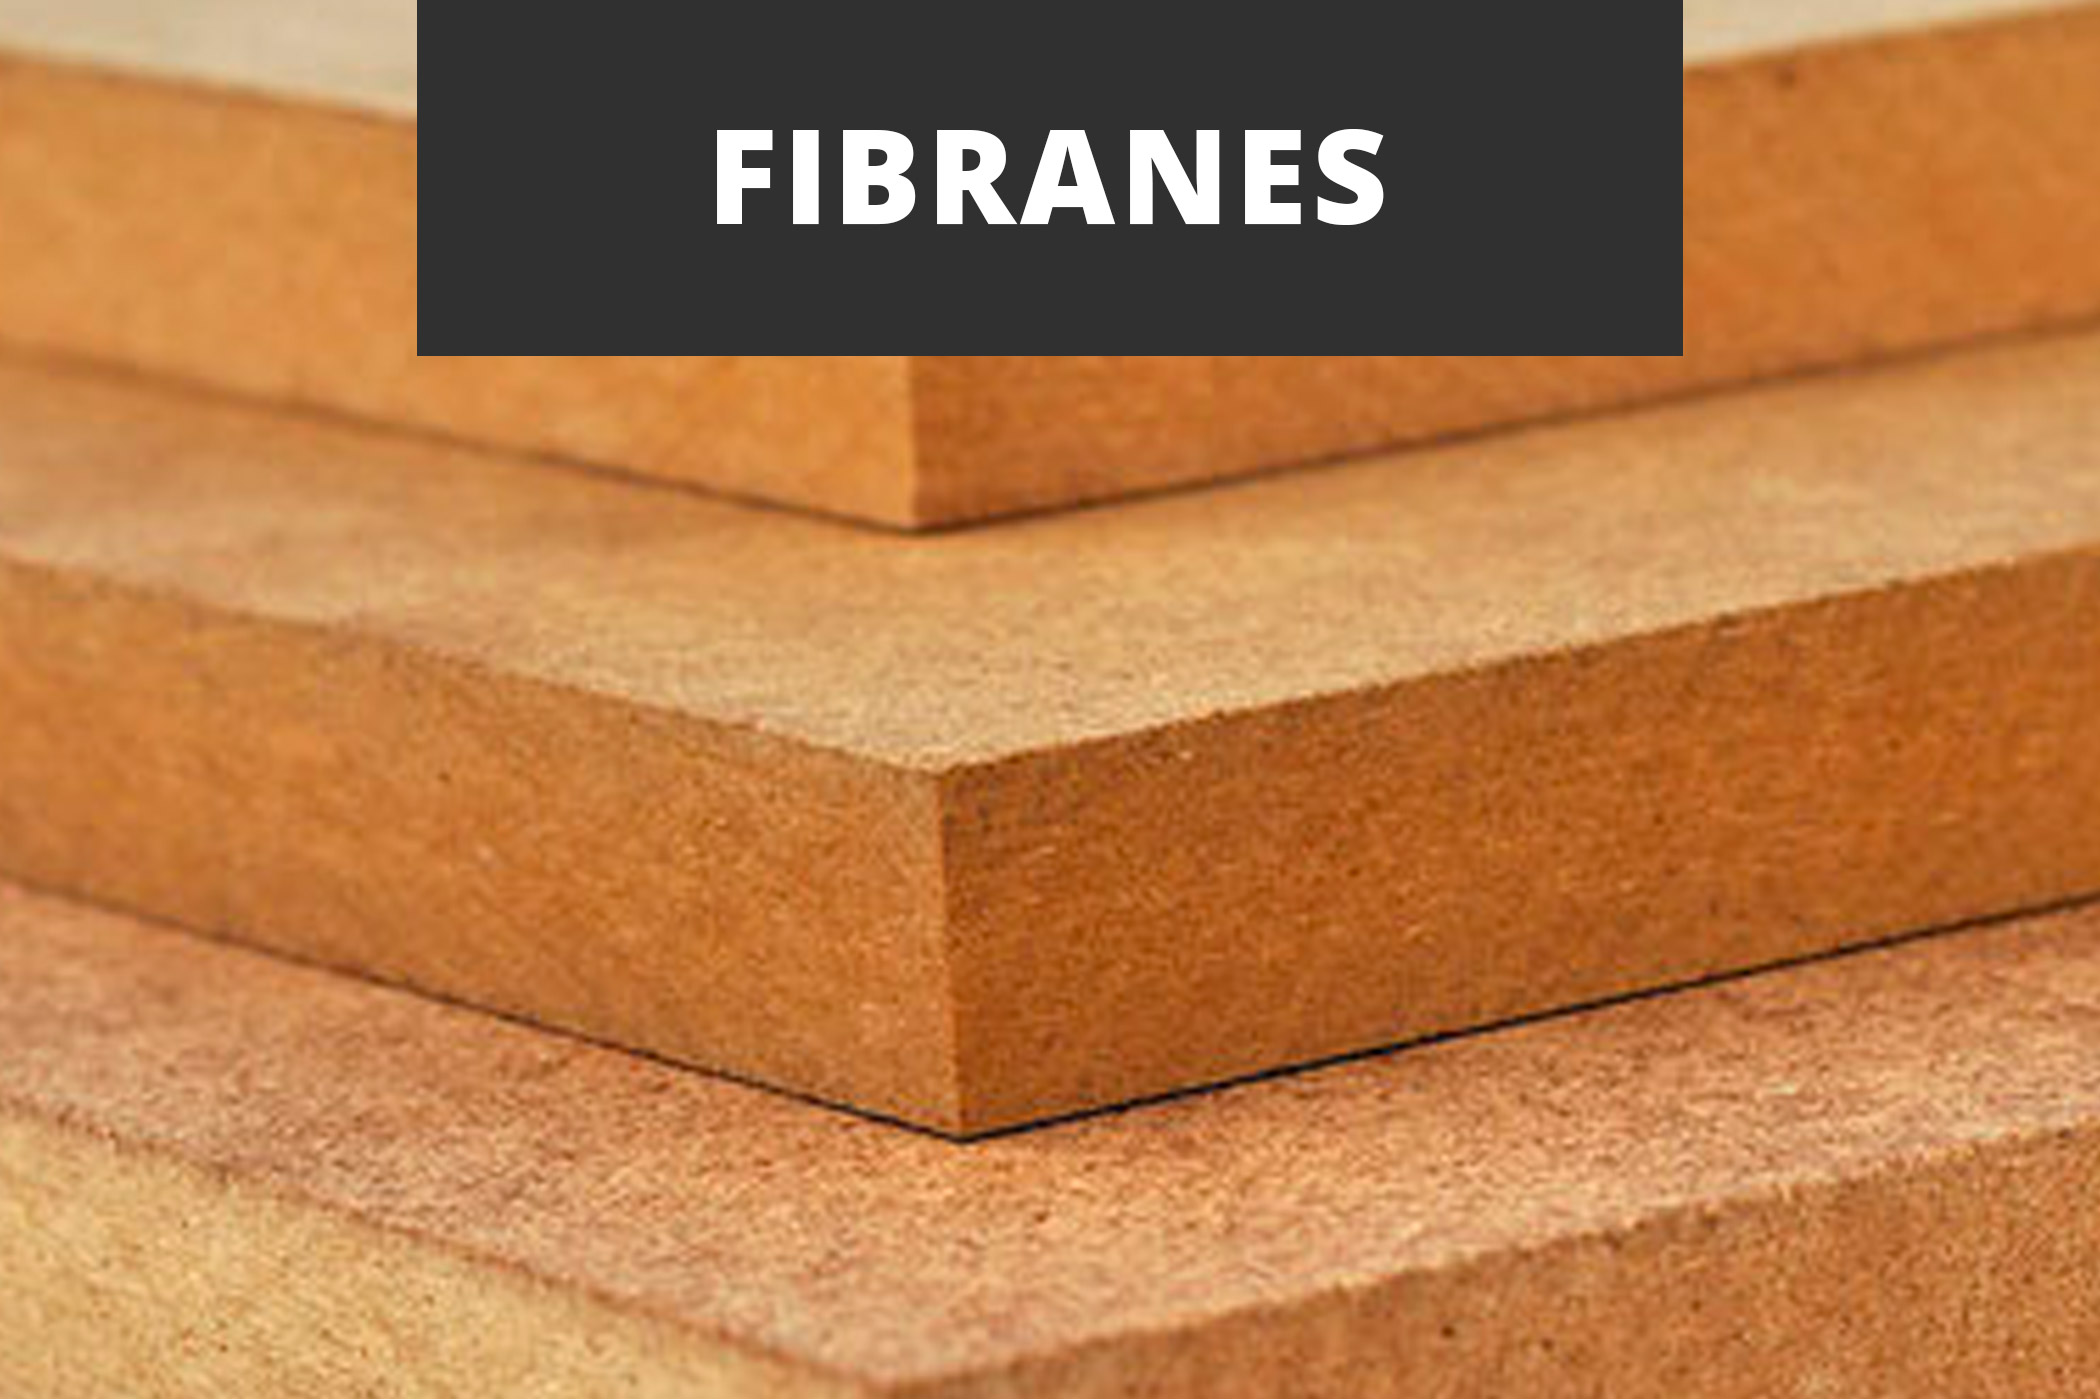 Fibranes